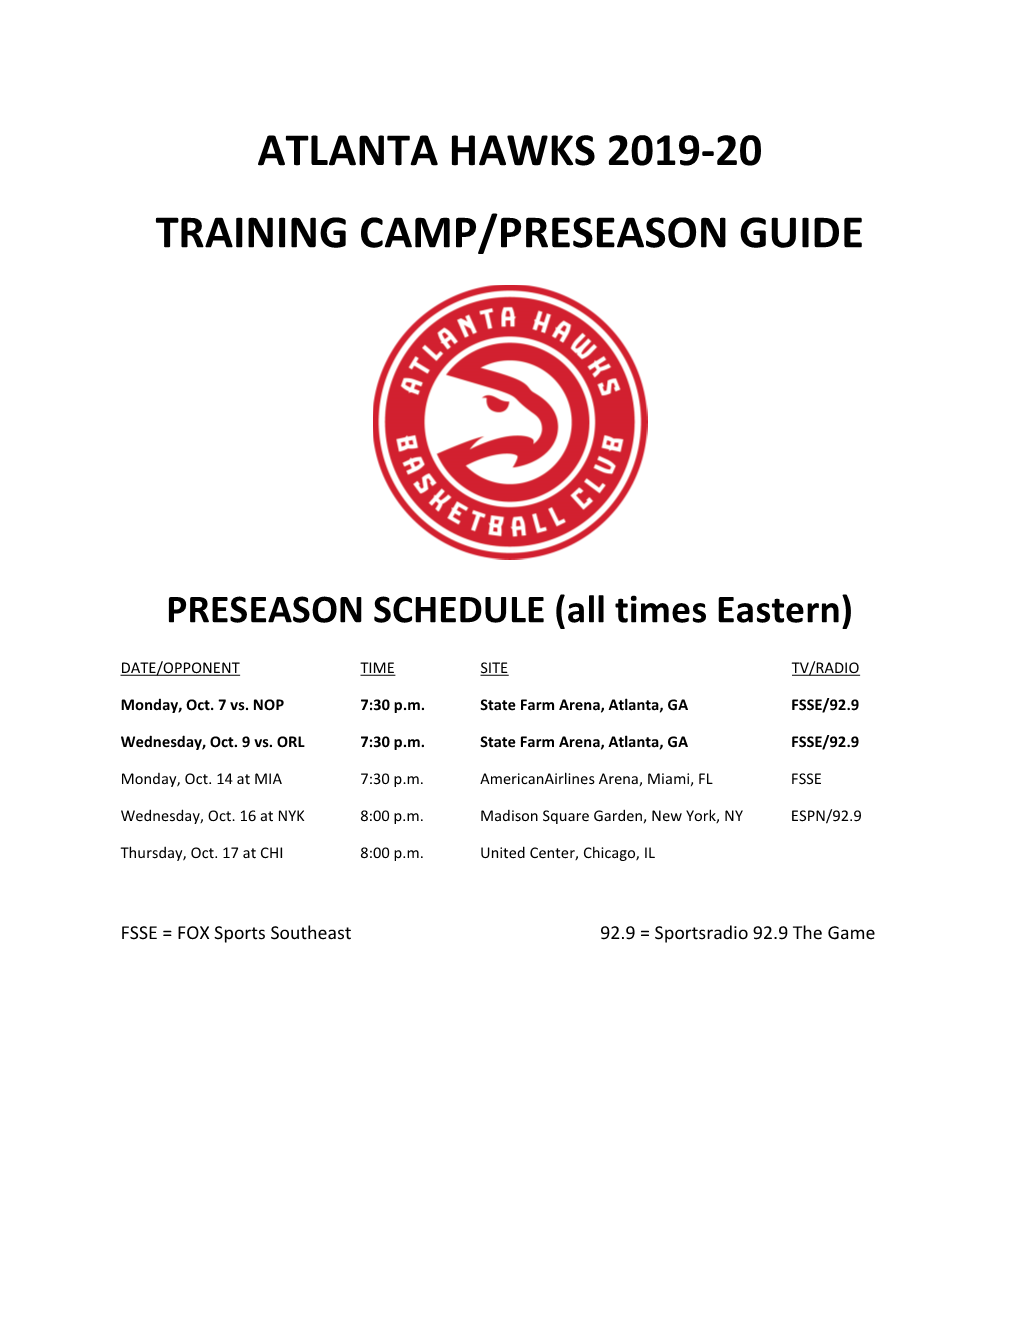 Atlanta Hawks 2019-20 Training Camp/Preseason Guide